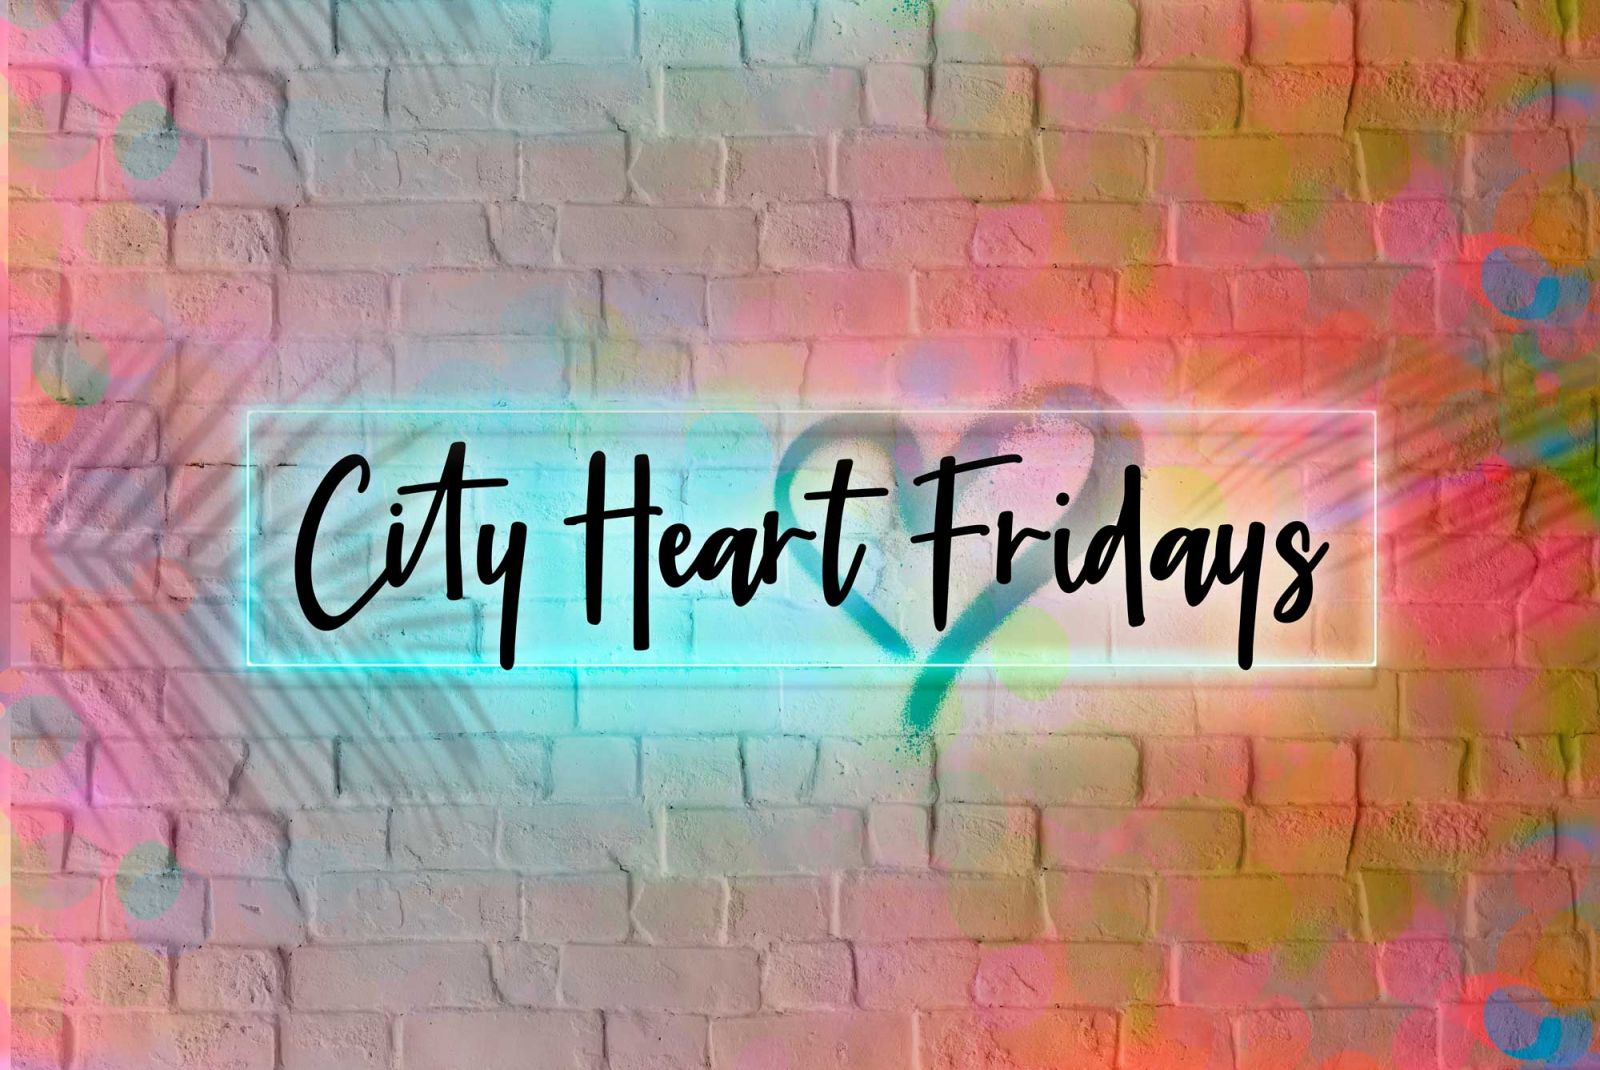 City Heart Fridays banner image